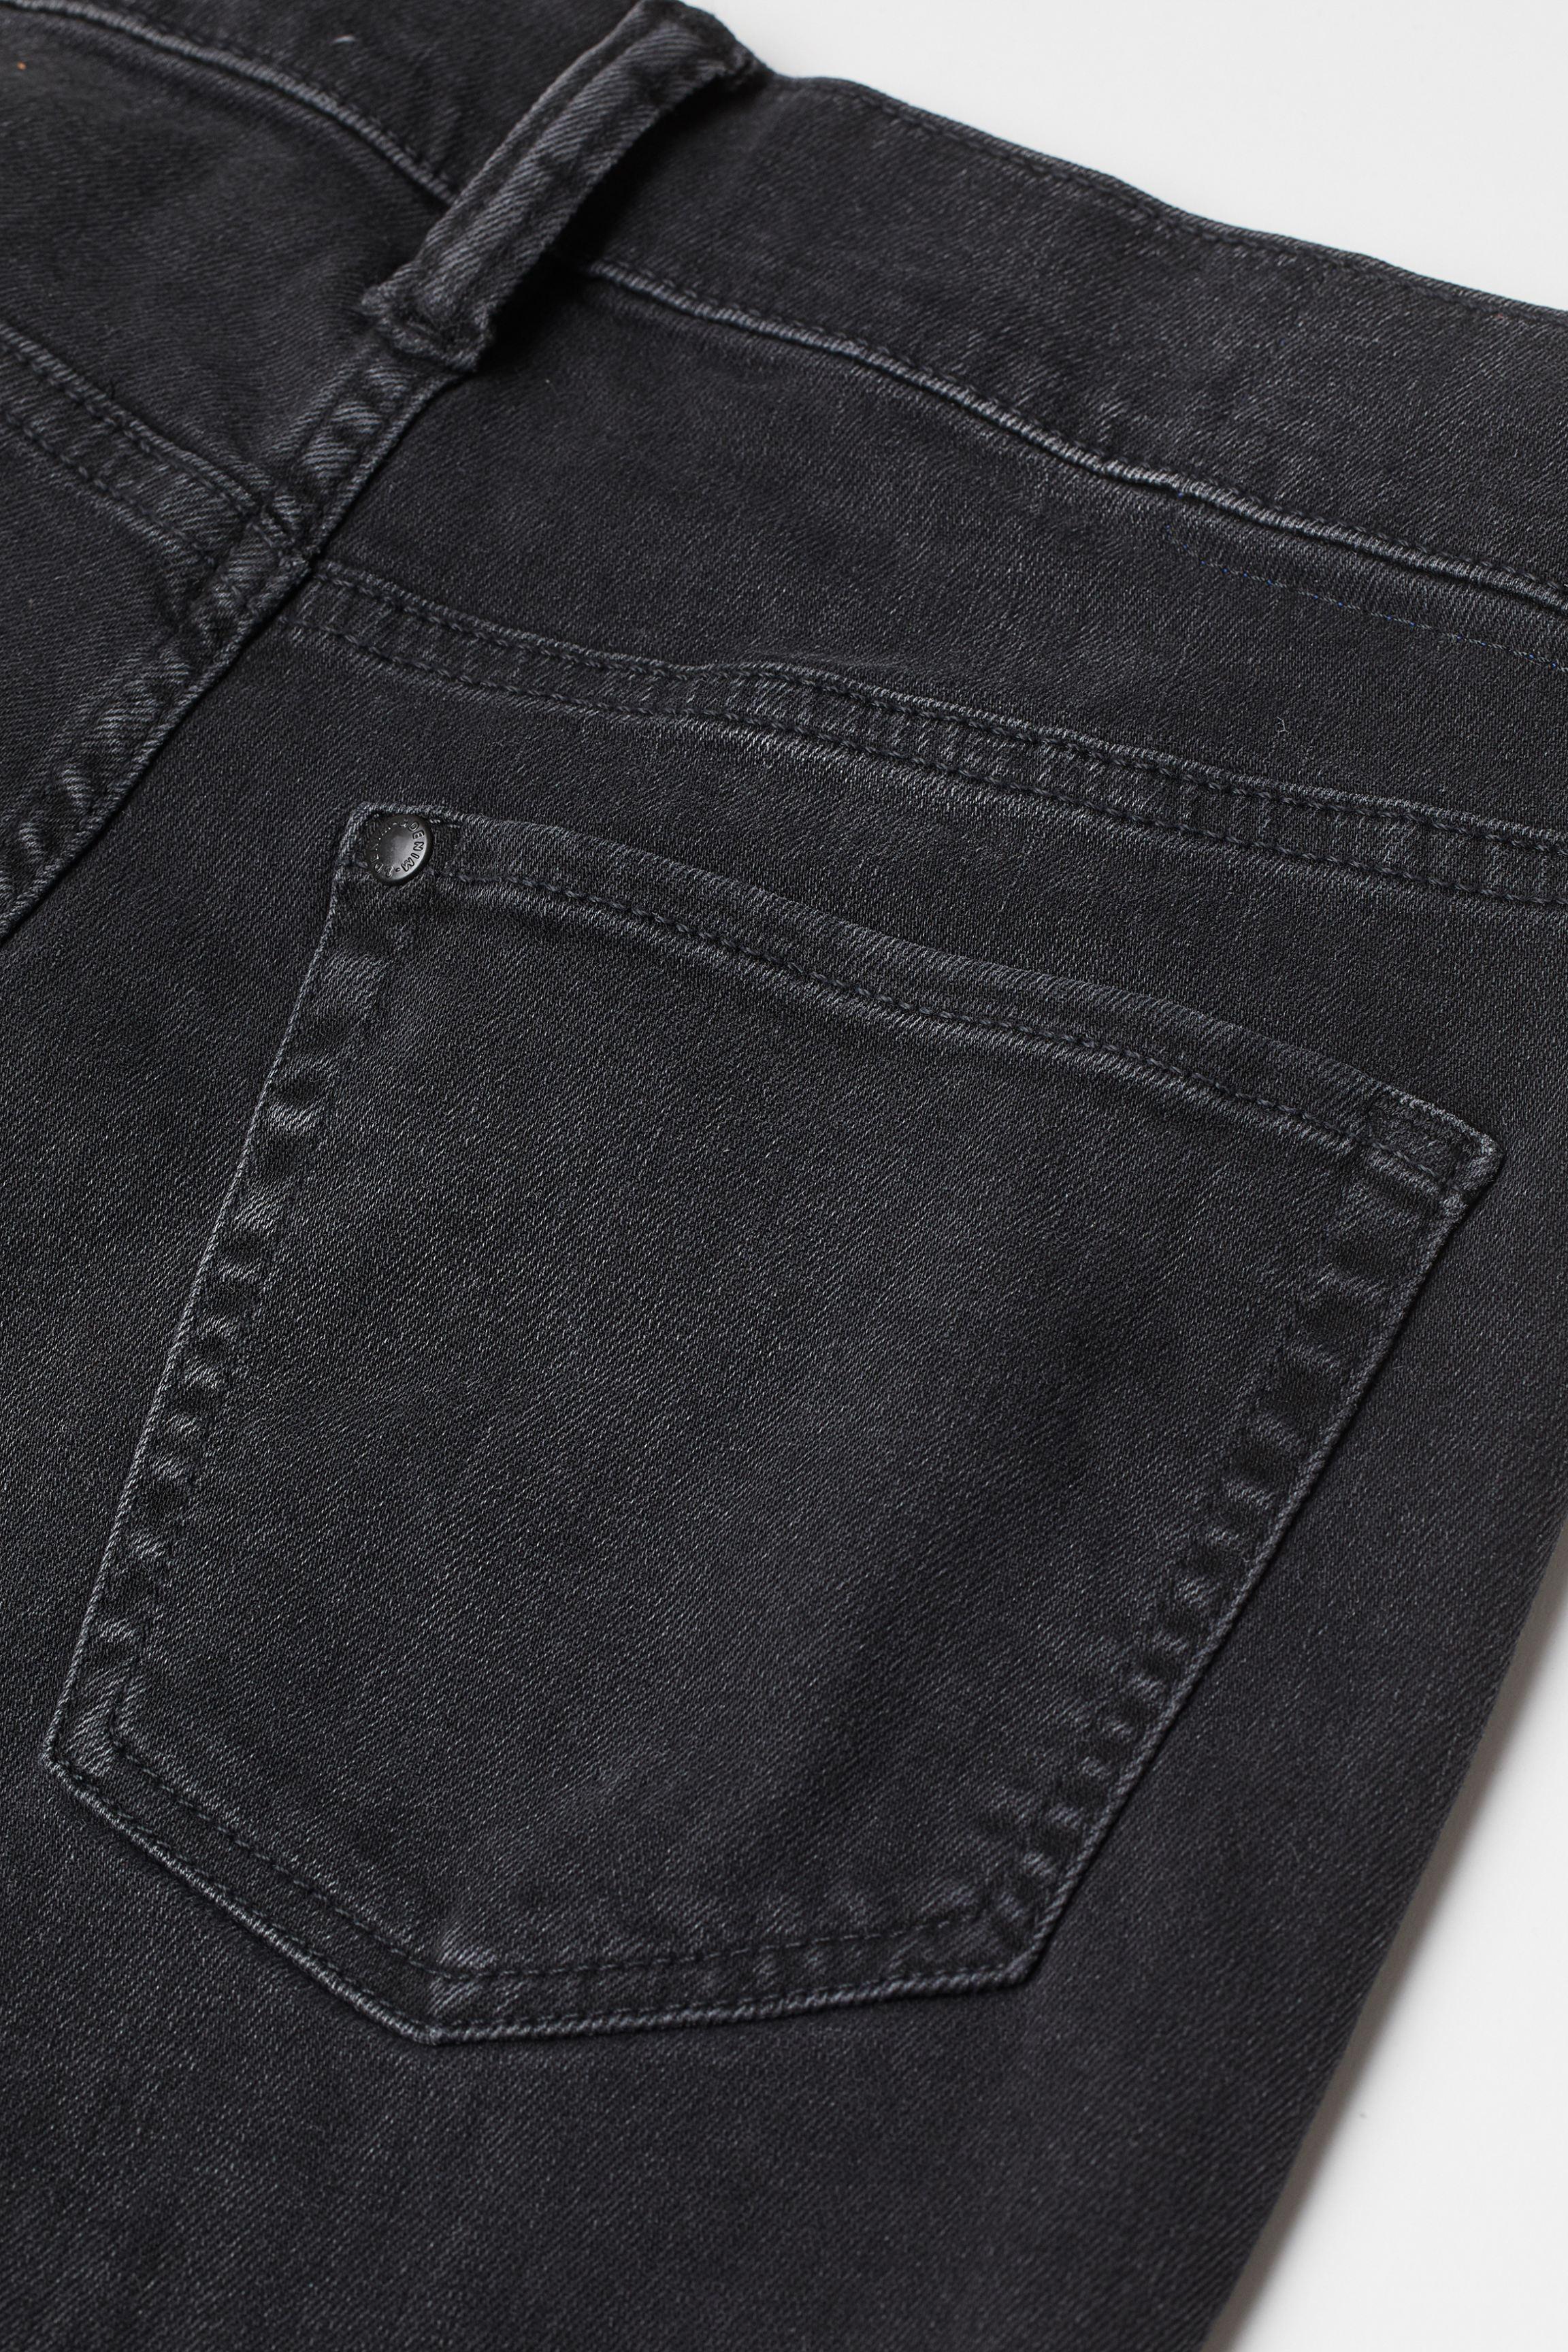 H&M Freefit® Skinny Jeans in Black for Men | Lyst